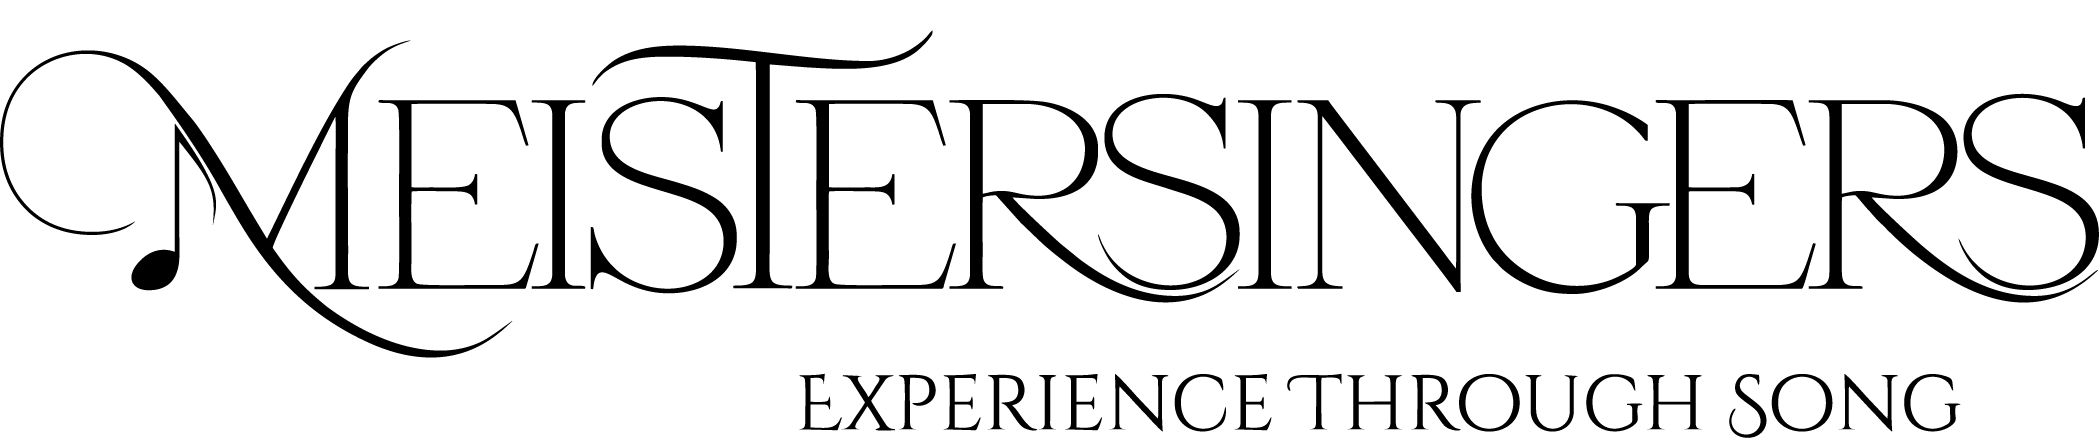 Meistersingers, Inc. logo